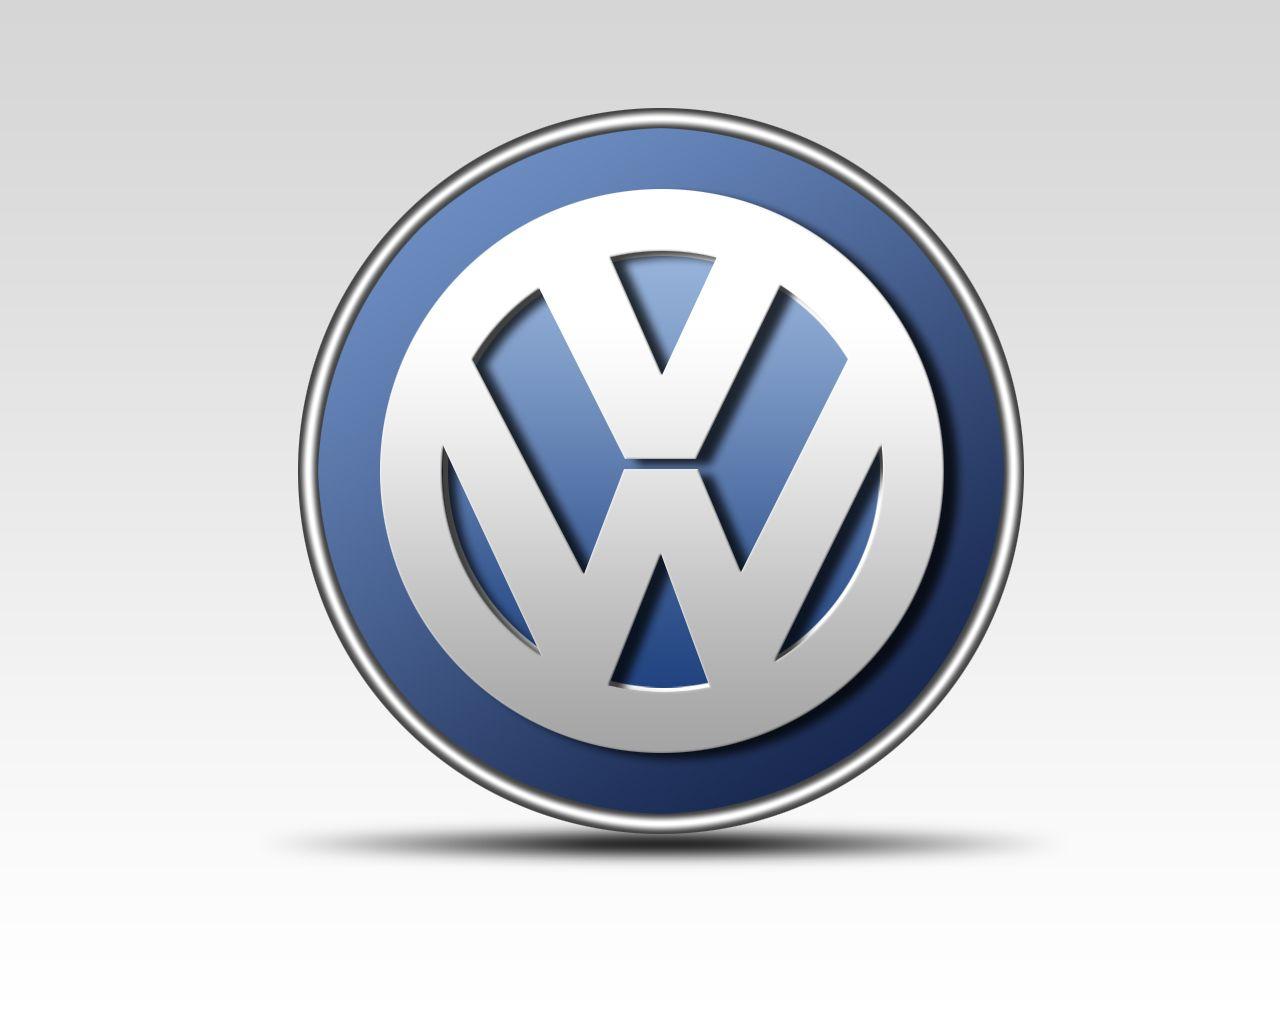 Blue White Brand Name Logo - Volkswagen Logo, Volkswagen Car Symbol Meaning and History | Car ...